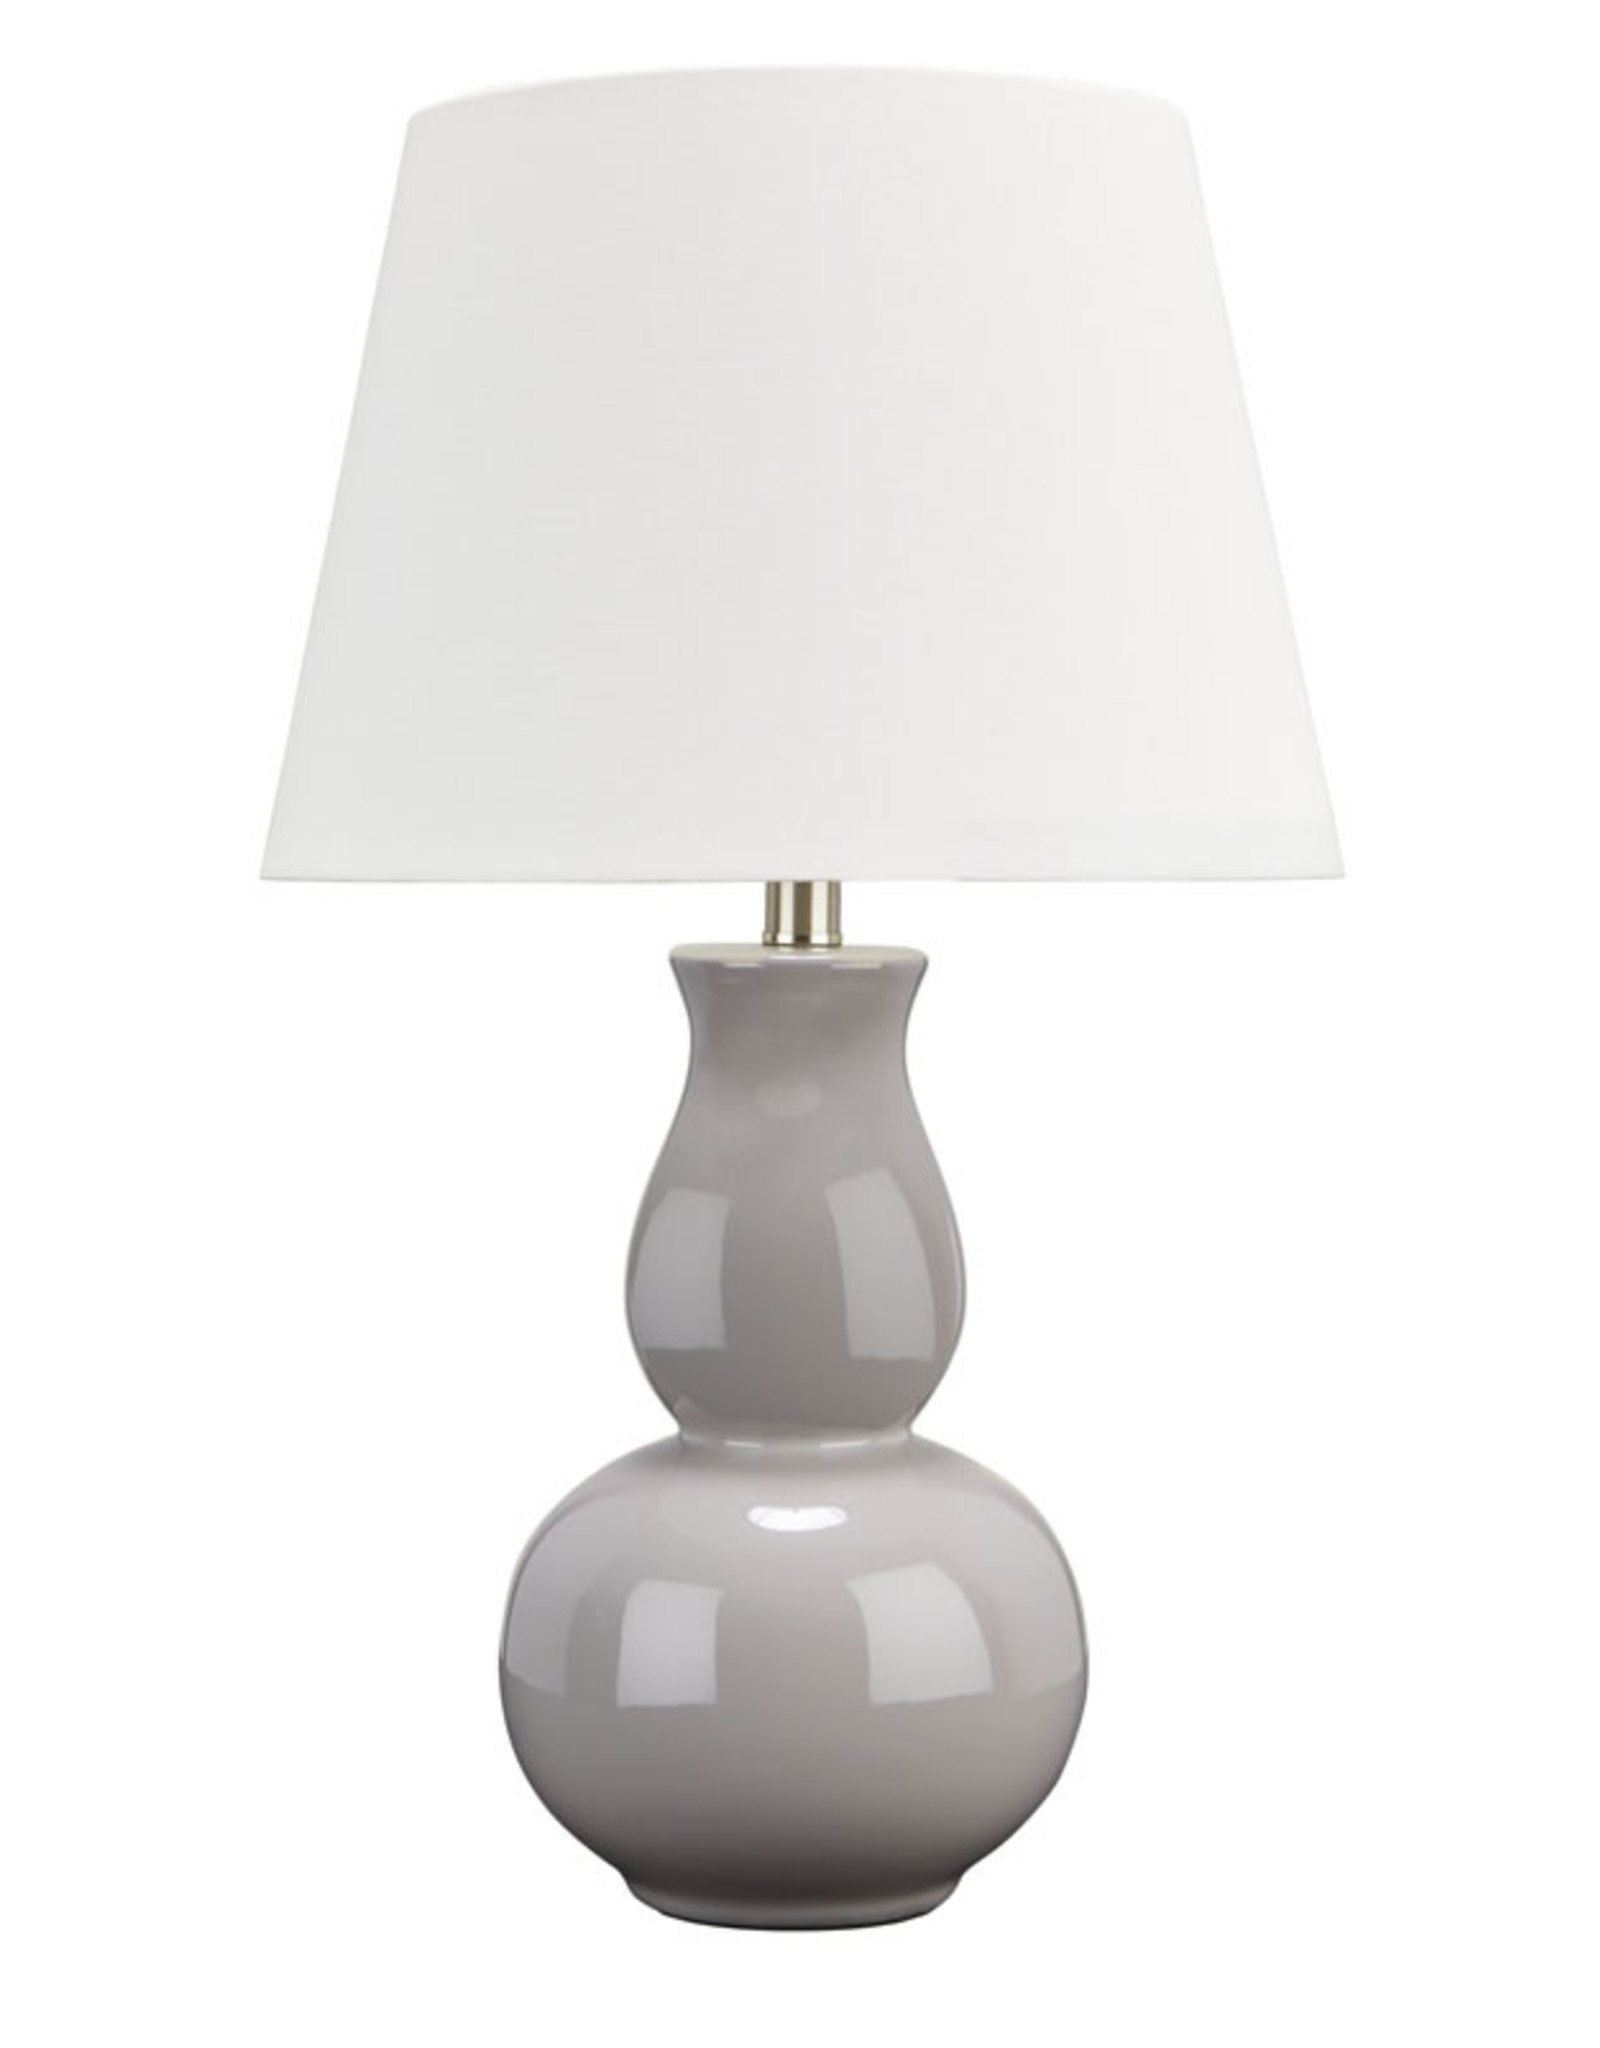 L180154   Ceramic Table Lamp Gray